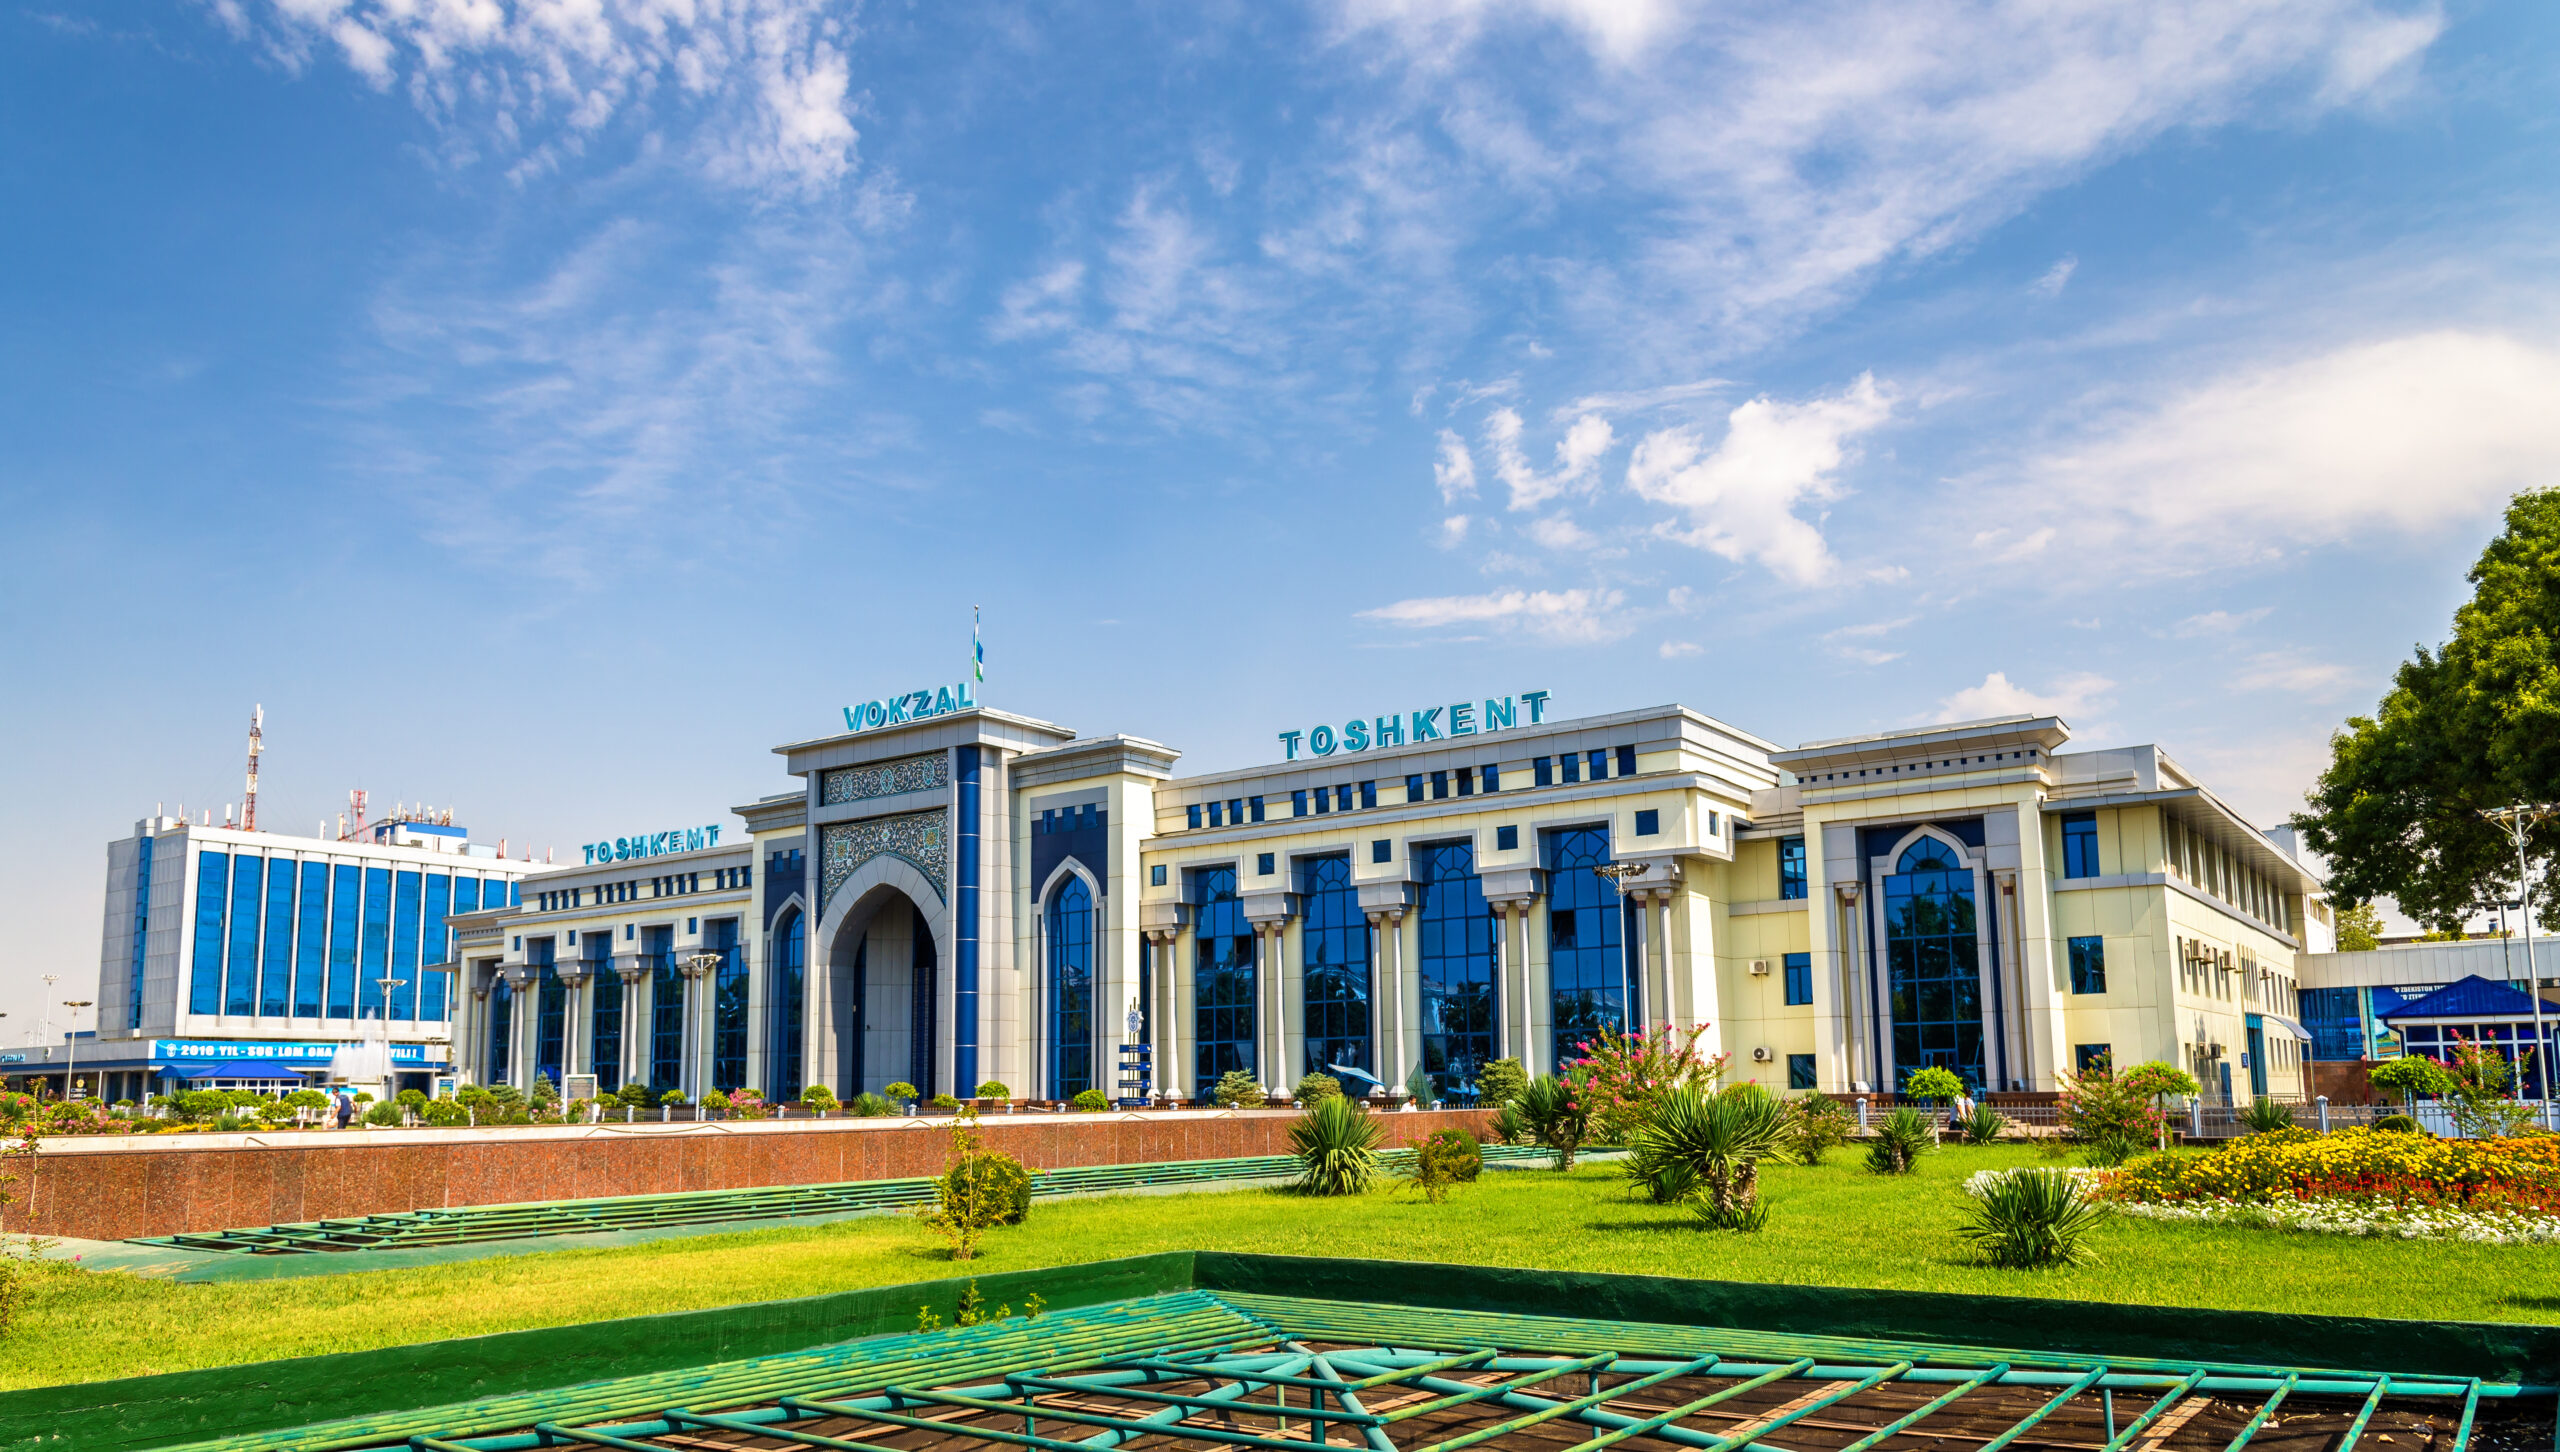 Partnerschaft in Usbekistan -Tashkent, Uzbekistan - August 12, 2016: View of Tashkent Railway Station. All railways within Uzbekistan are operated by a state-owned stock company